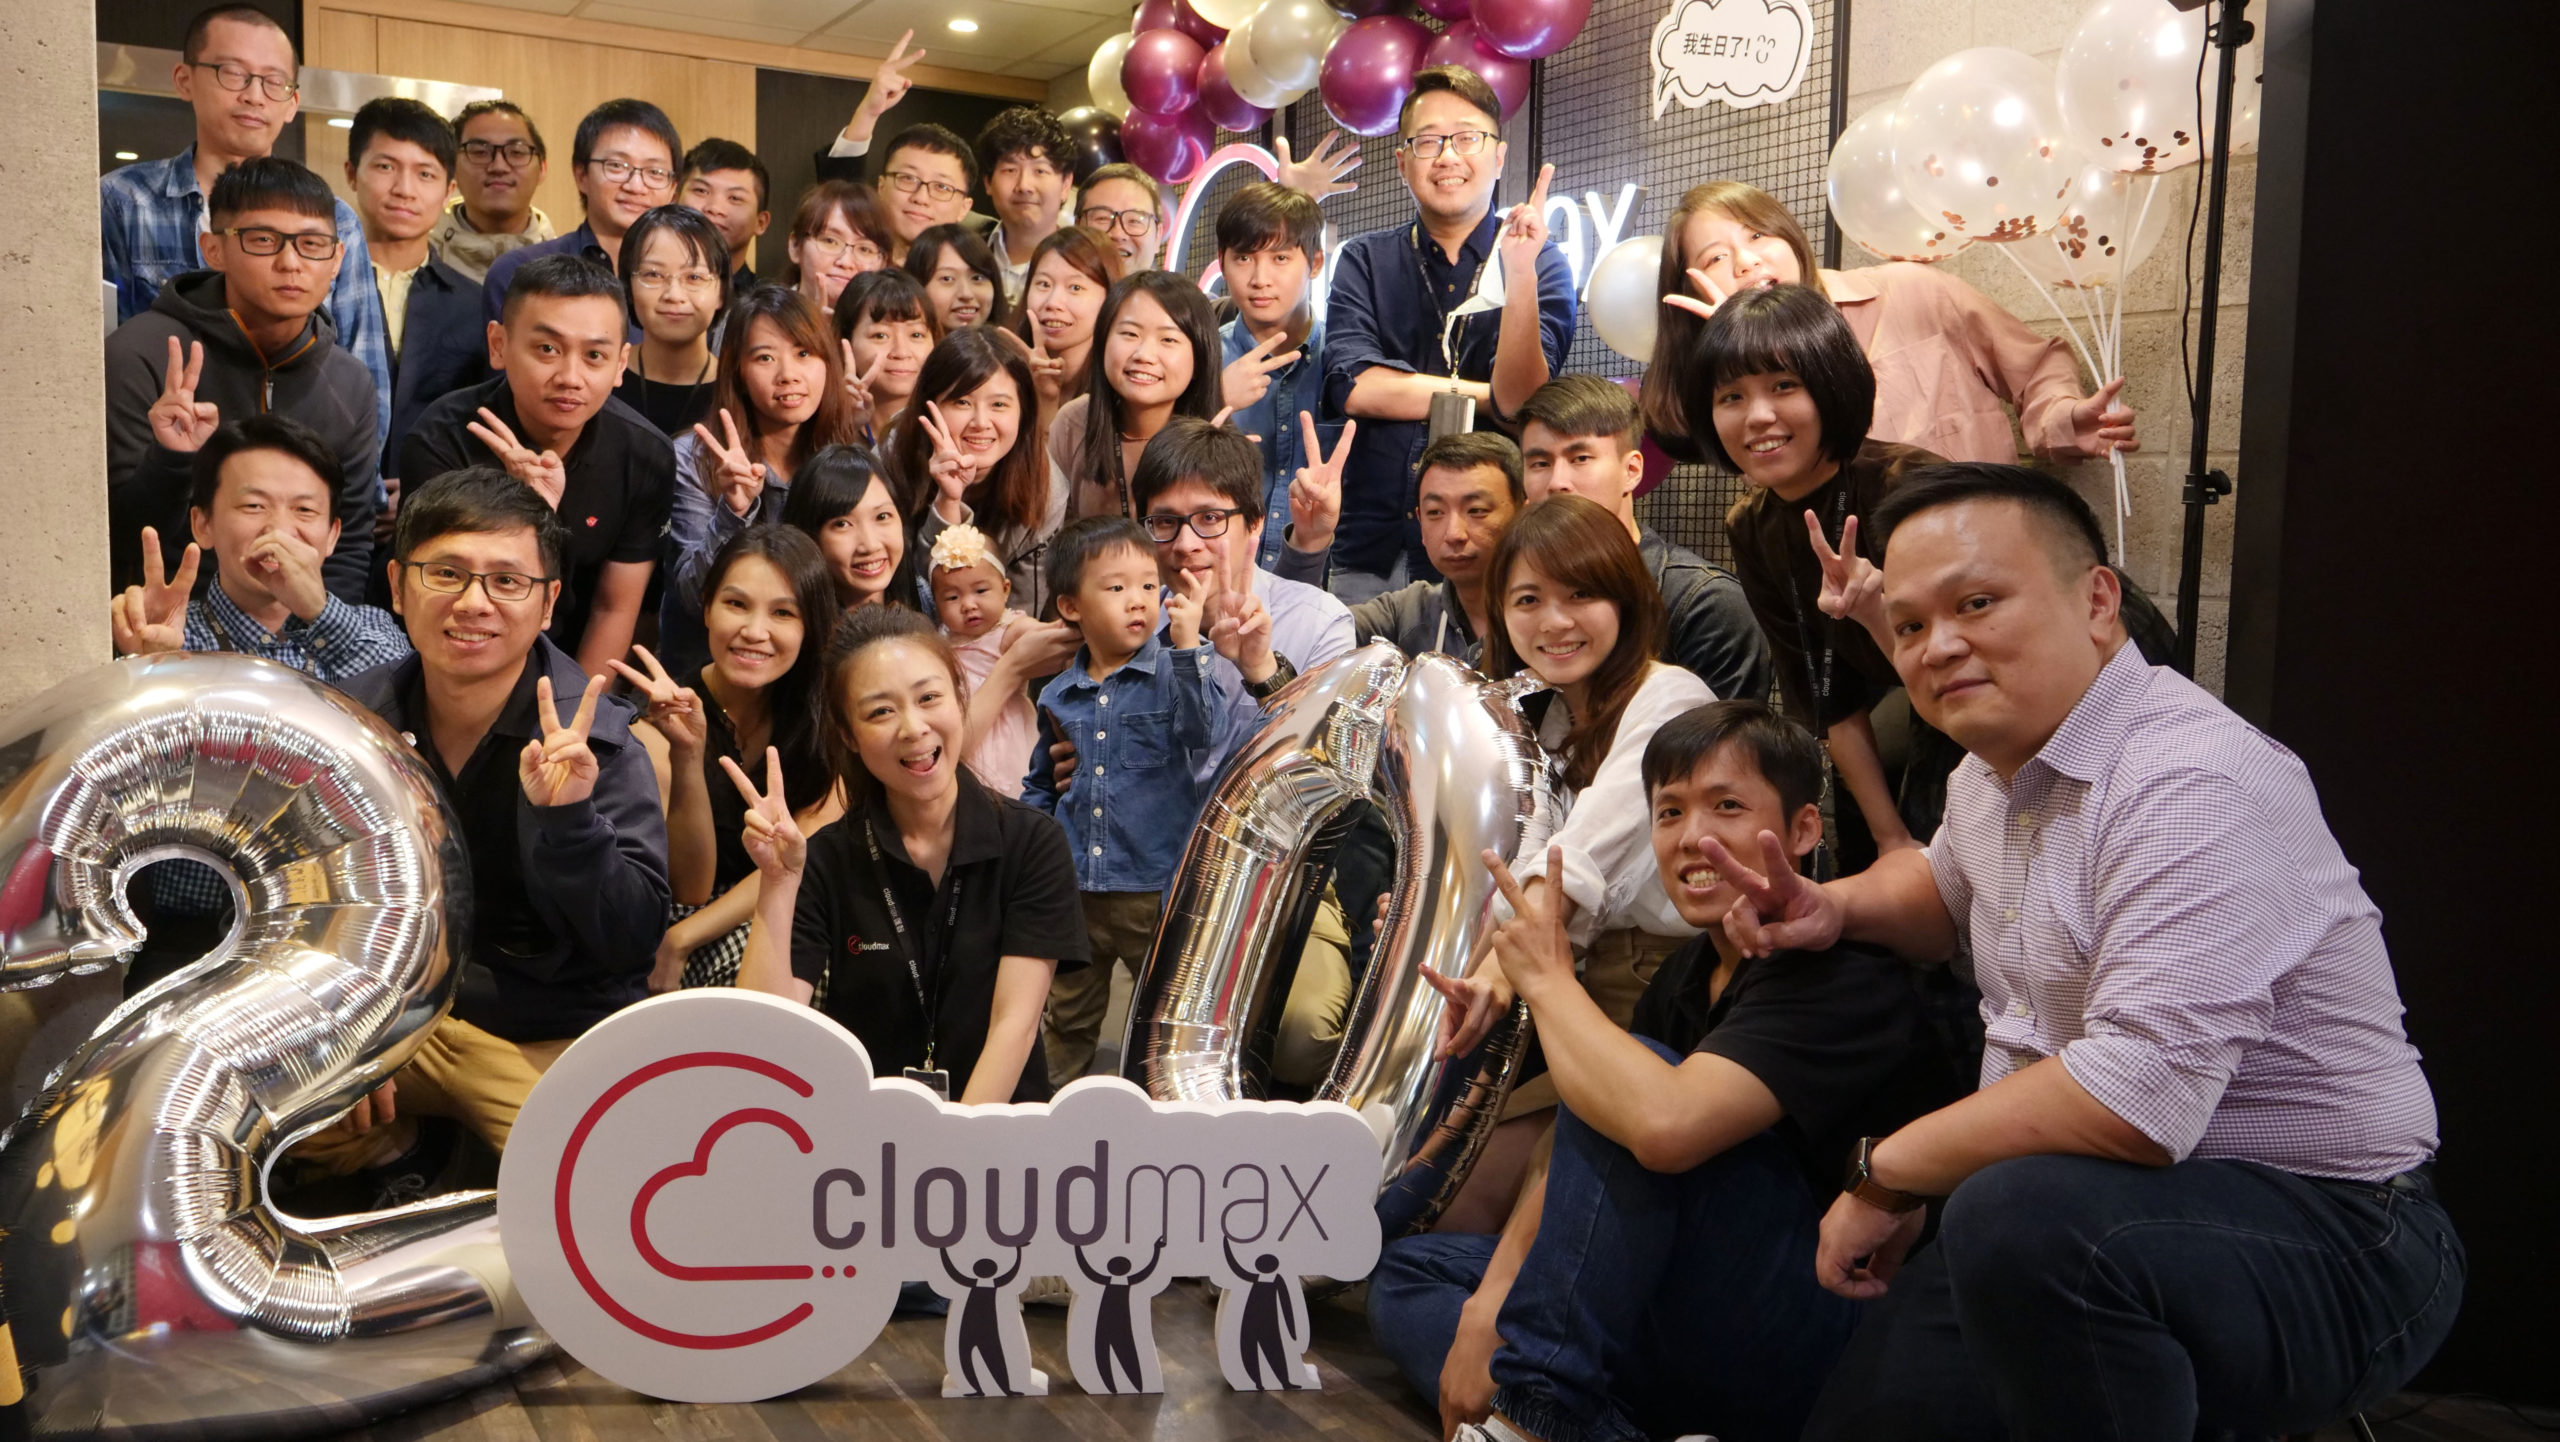 Cloudmax20th 全體合照